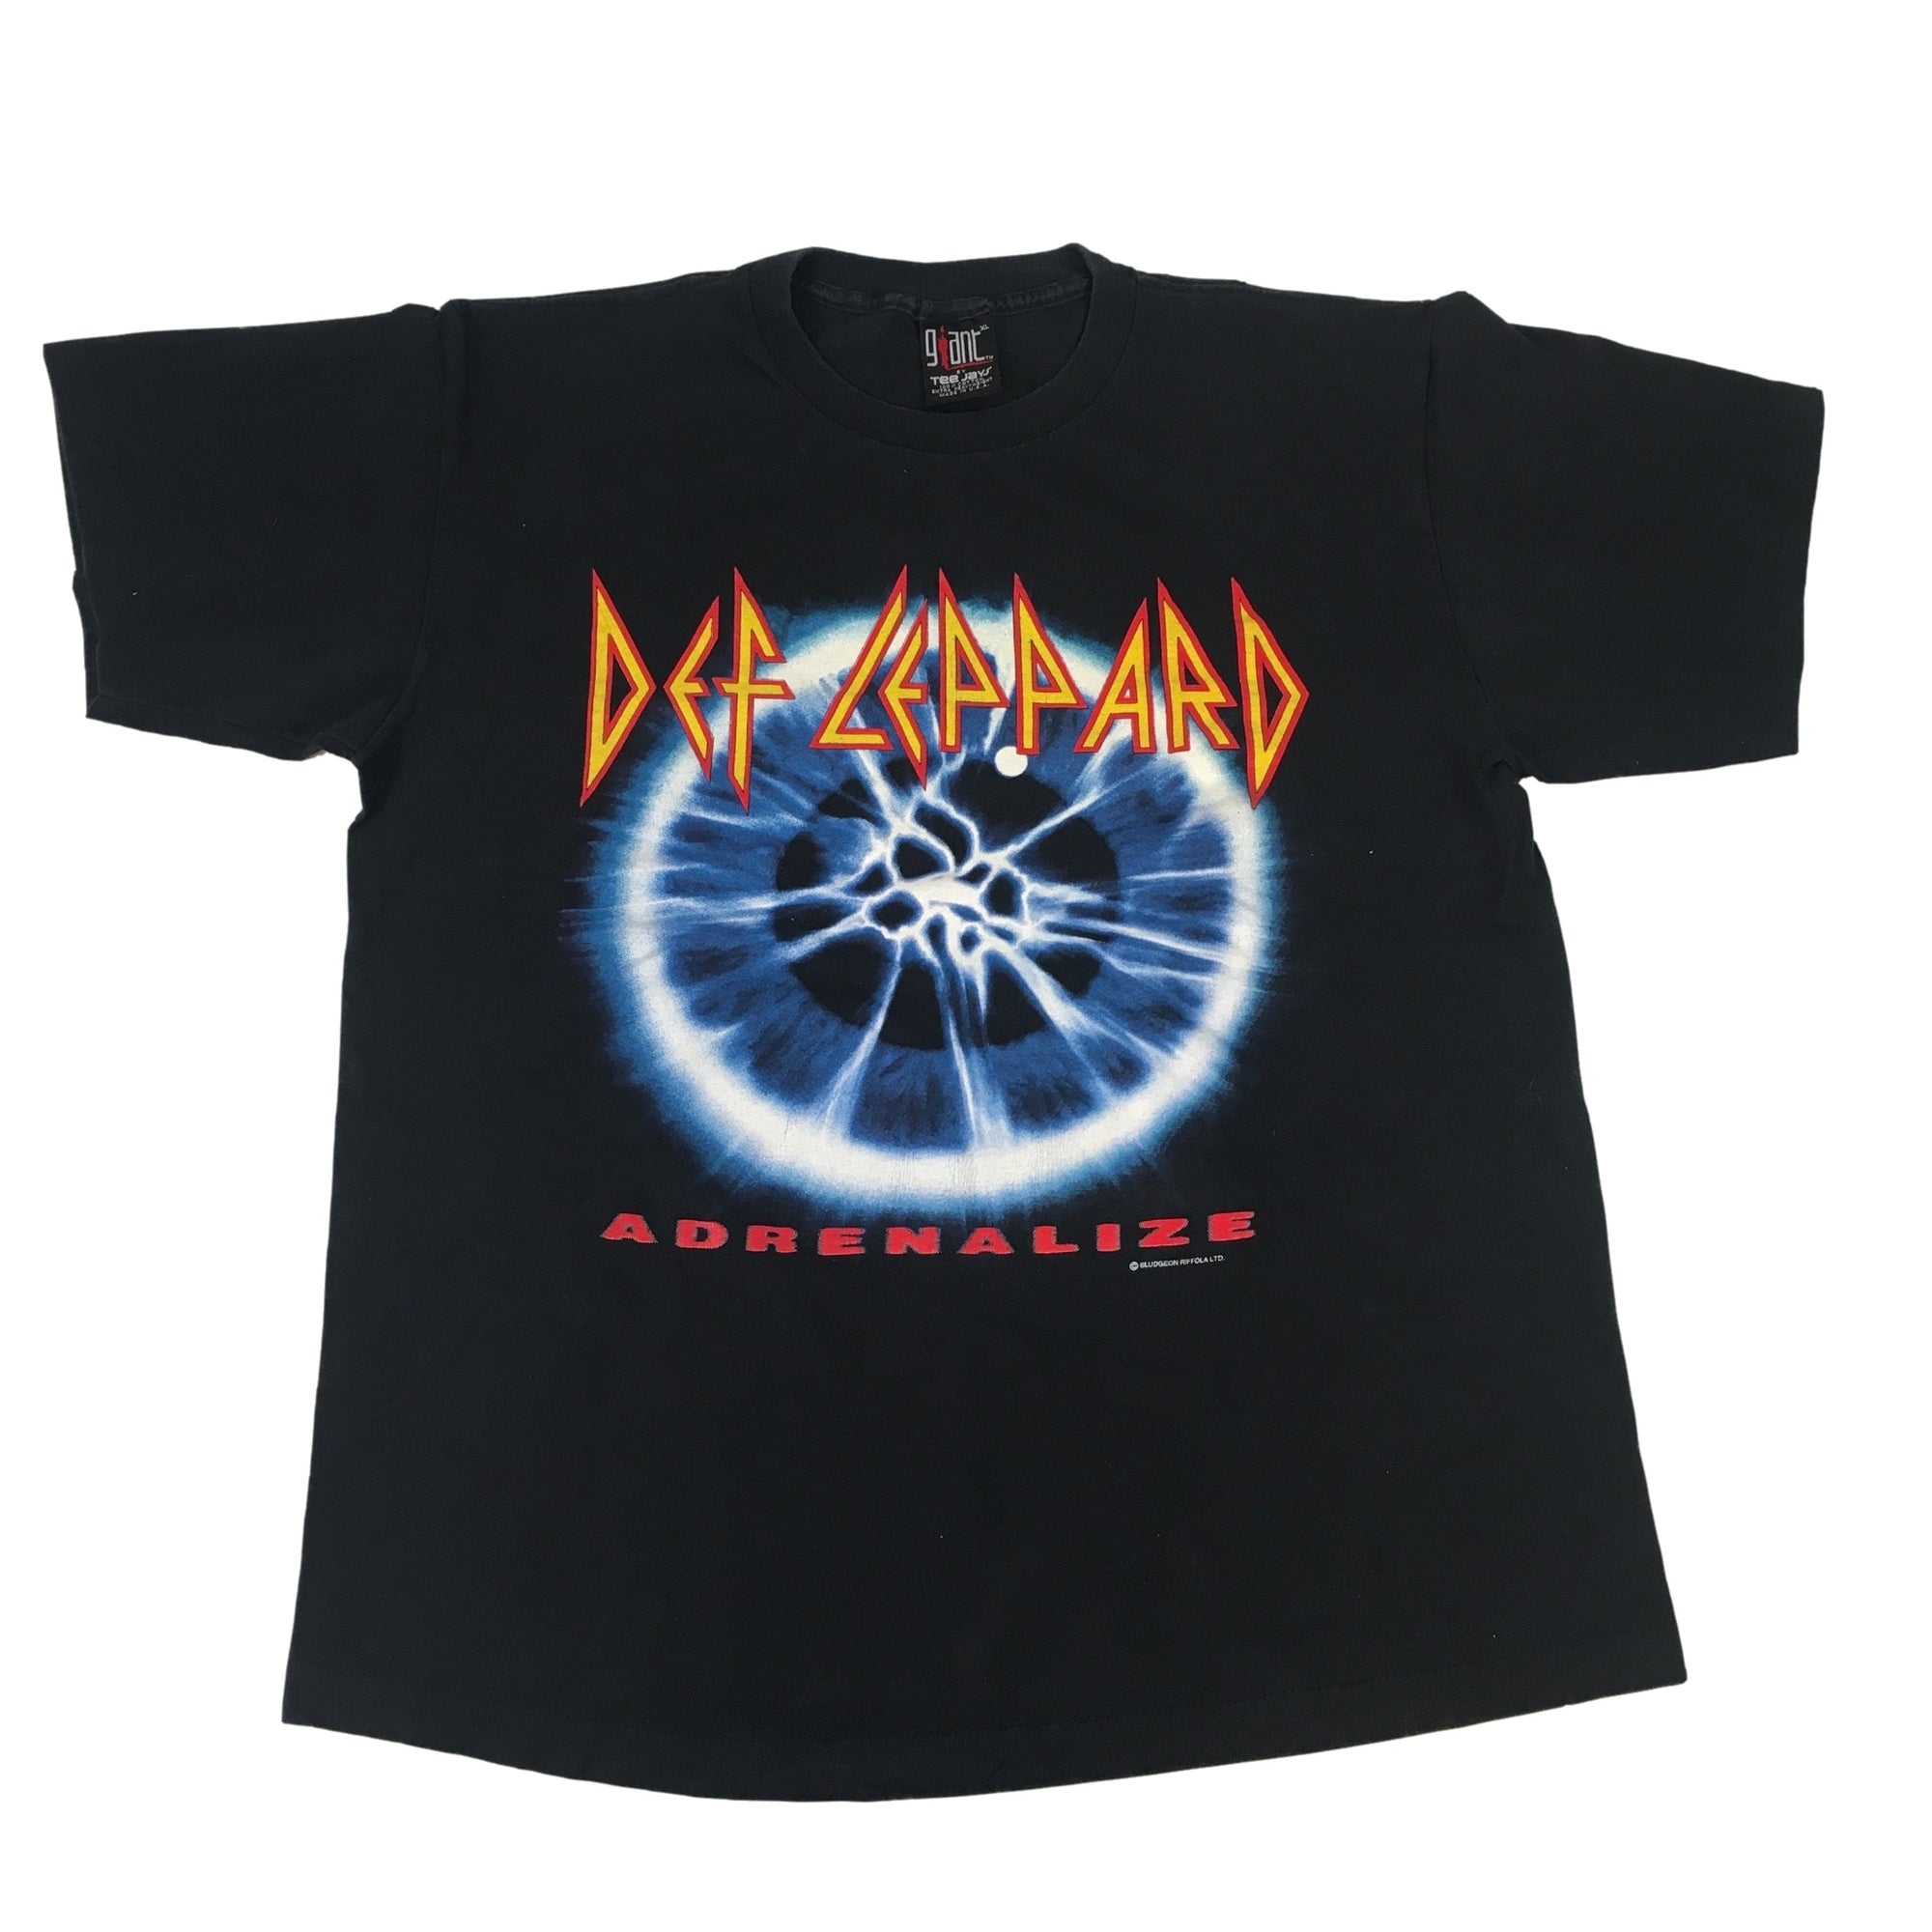 Vintage Def Leppard "Adrenalize" T-Shirt - jointcustodydc